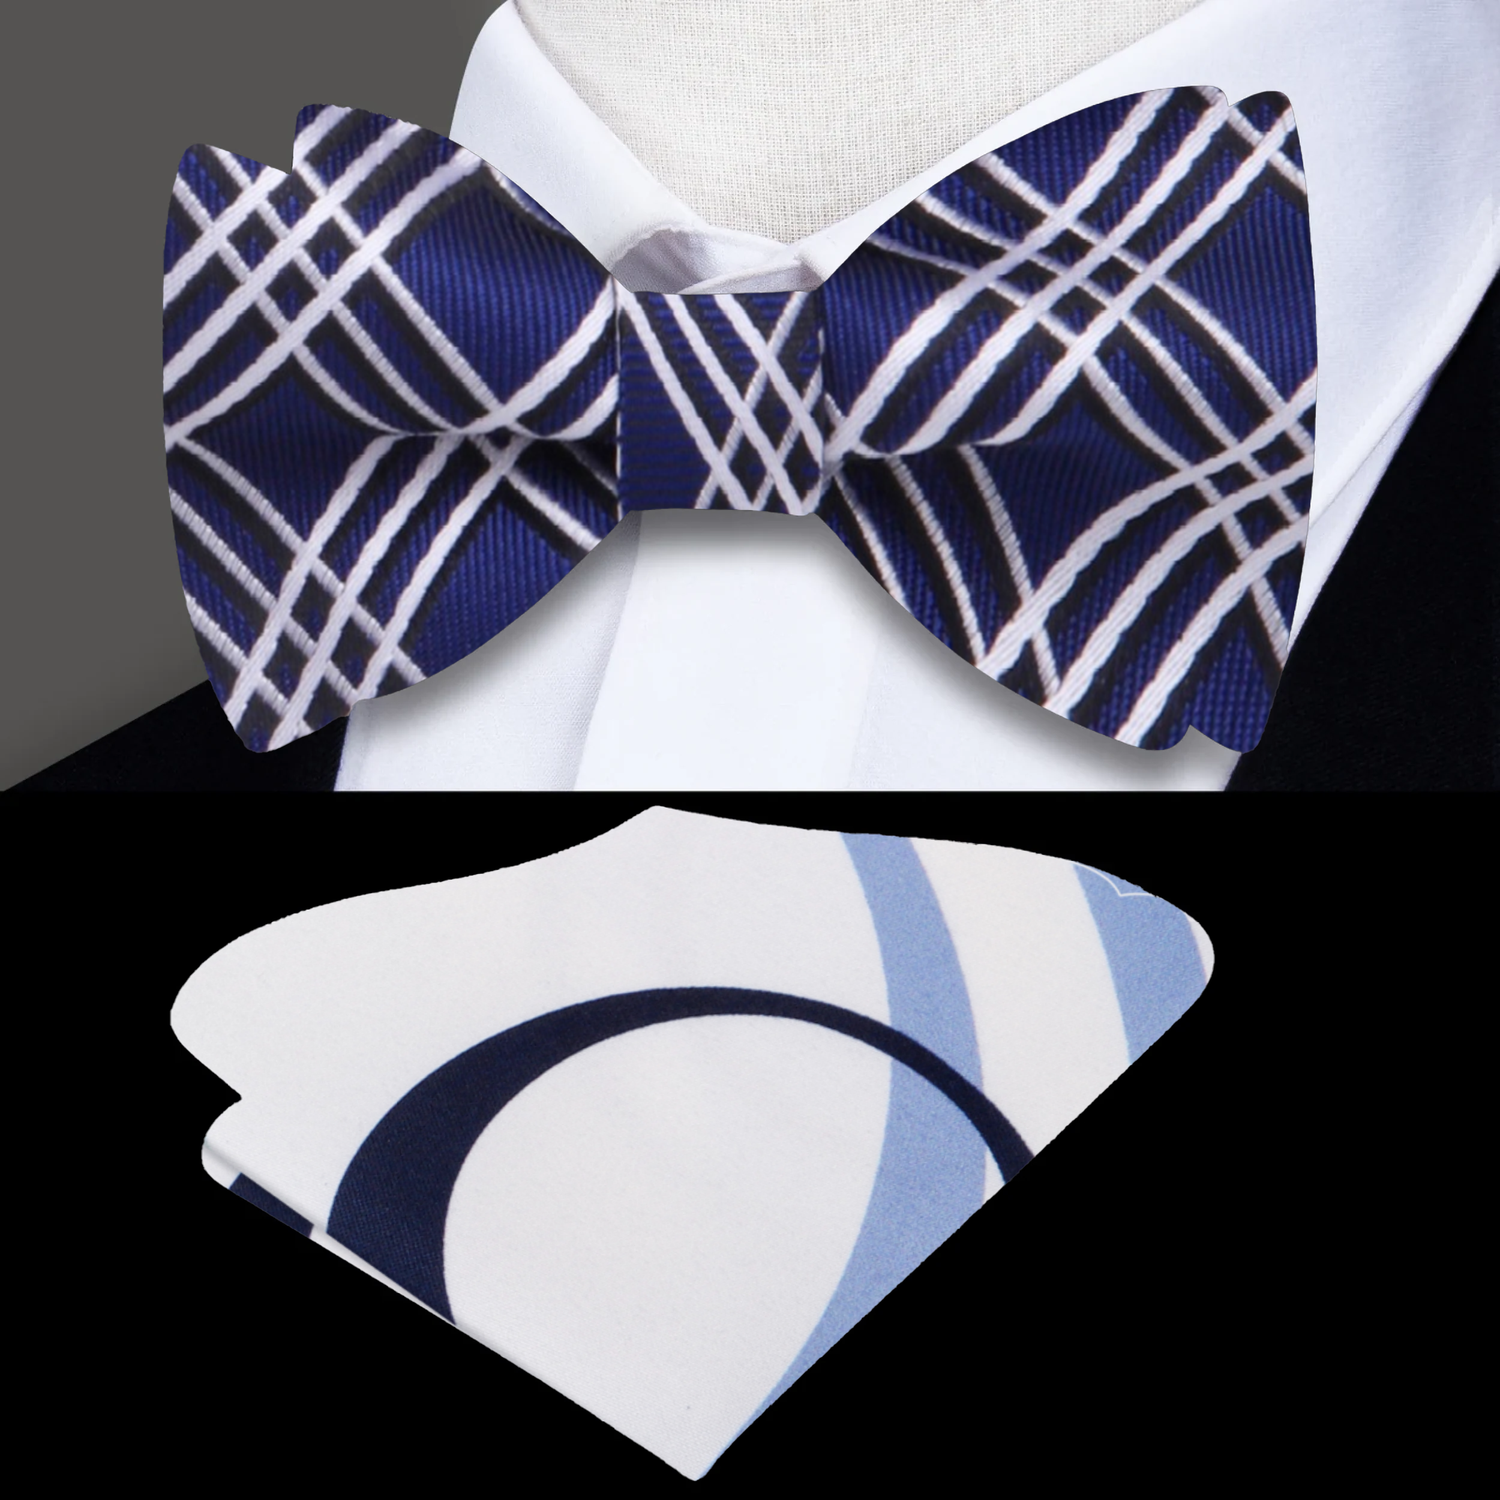 Centennial Self-Tie Bow Tie